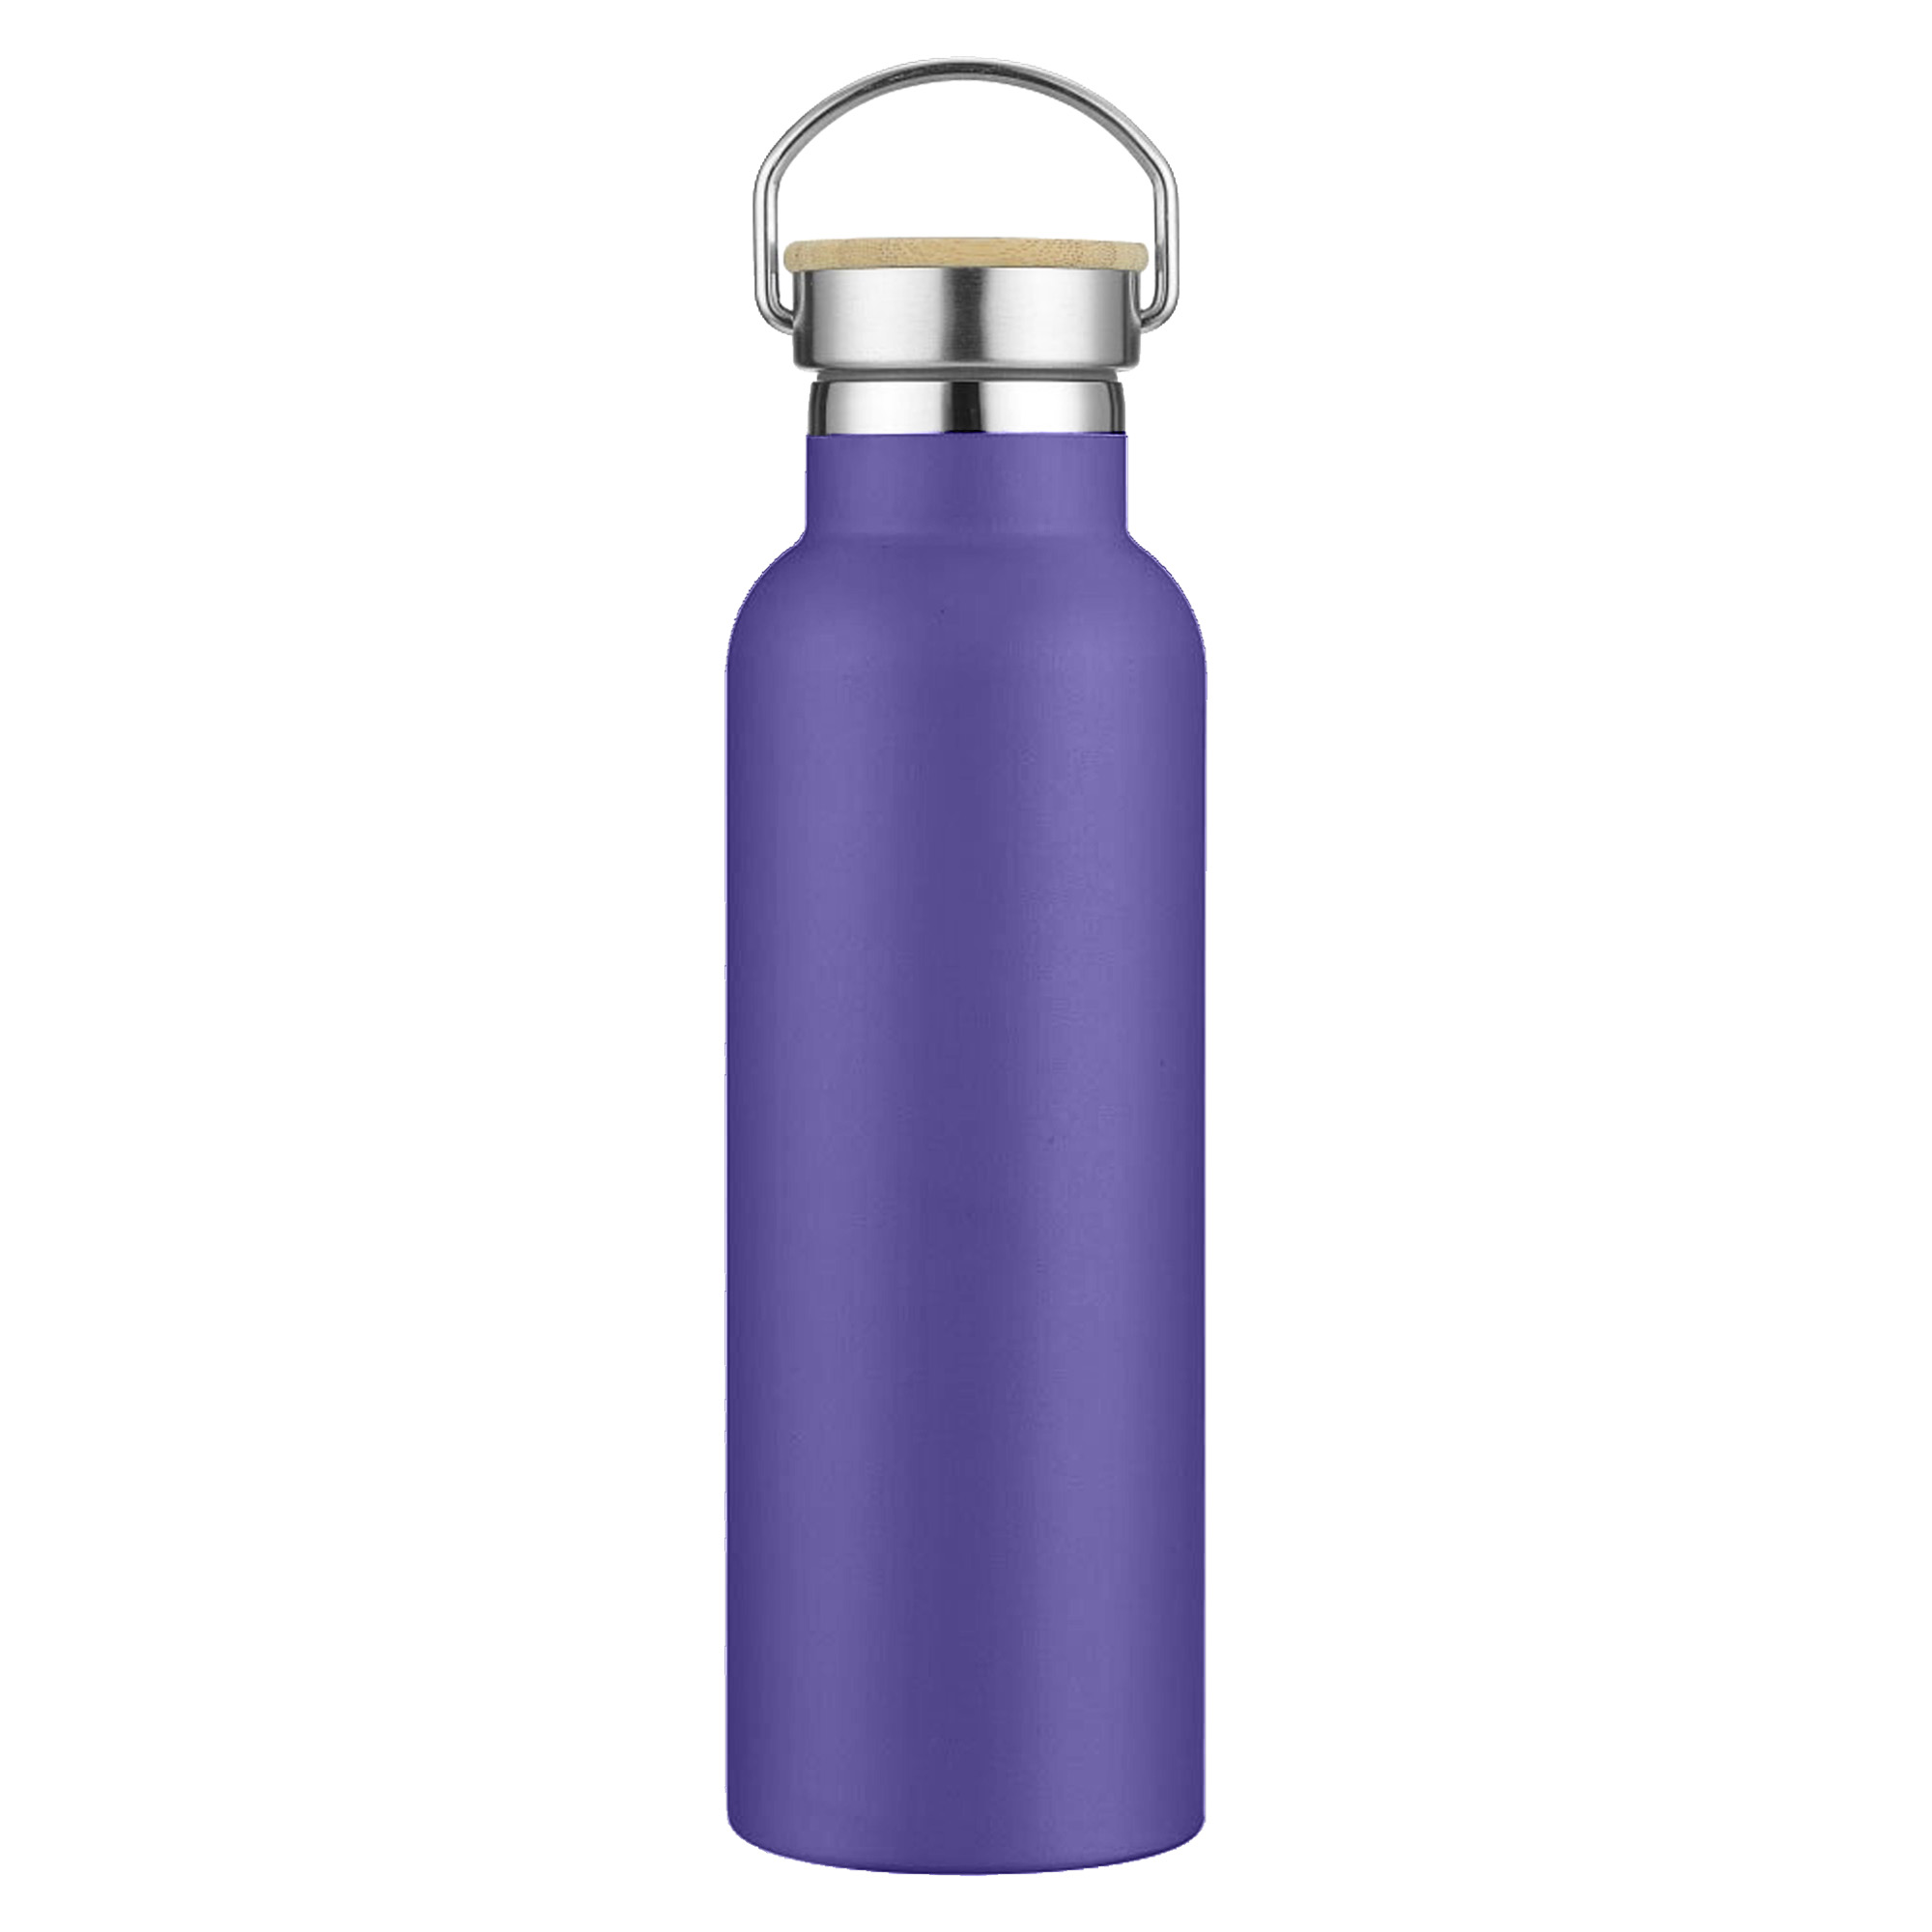 Bulk Promotional Purple Miami Drink Bottle Online in Perth Australia